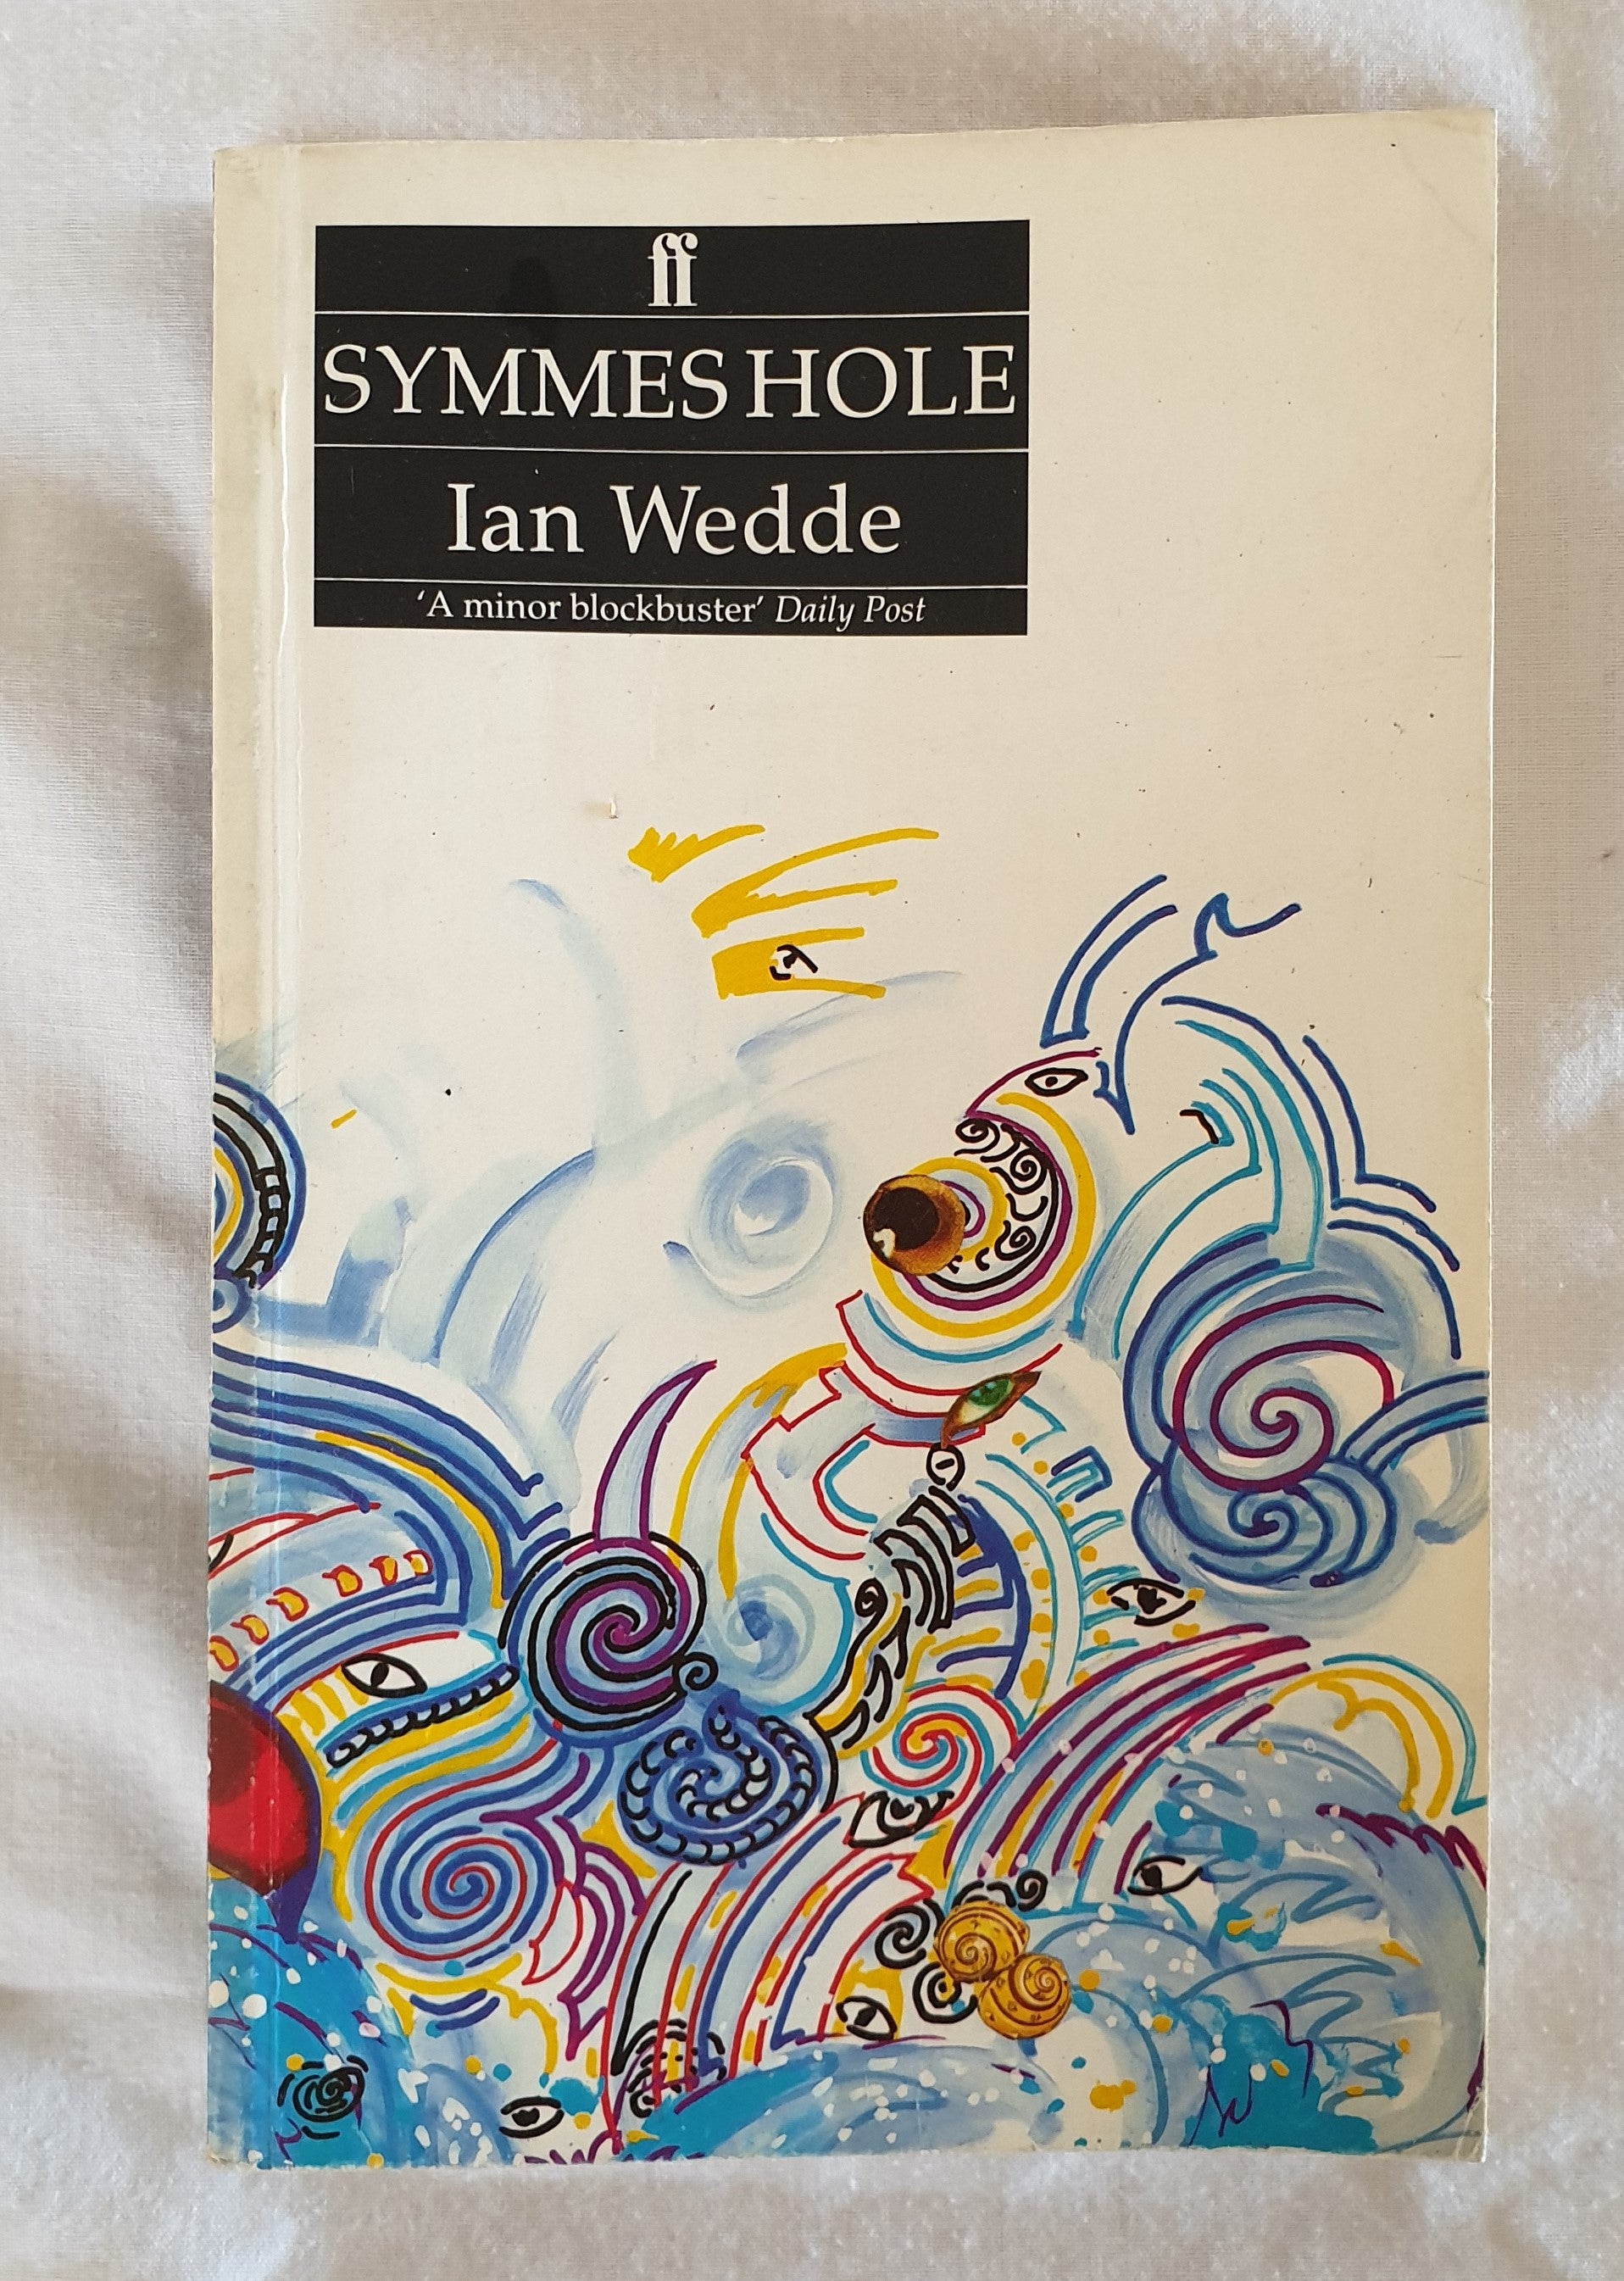 Symmes Hole by Ian Wedde